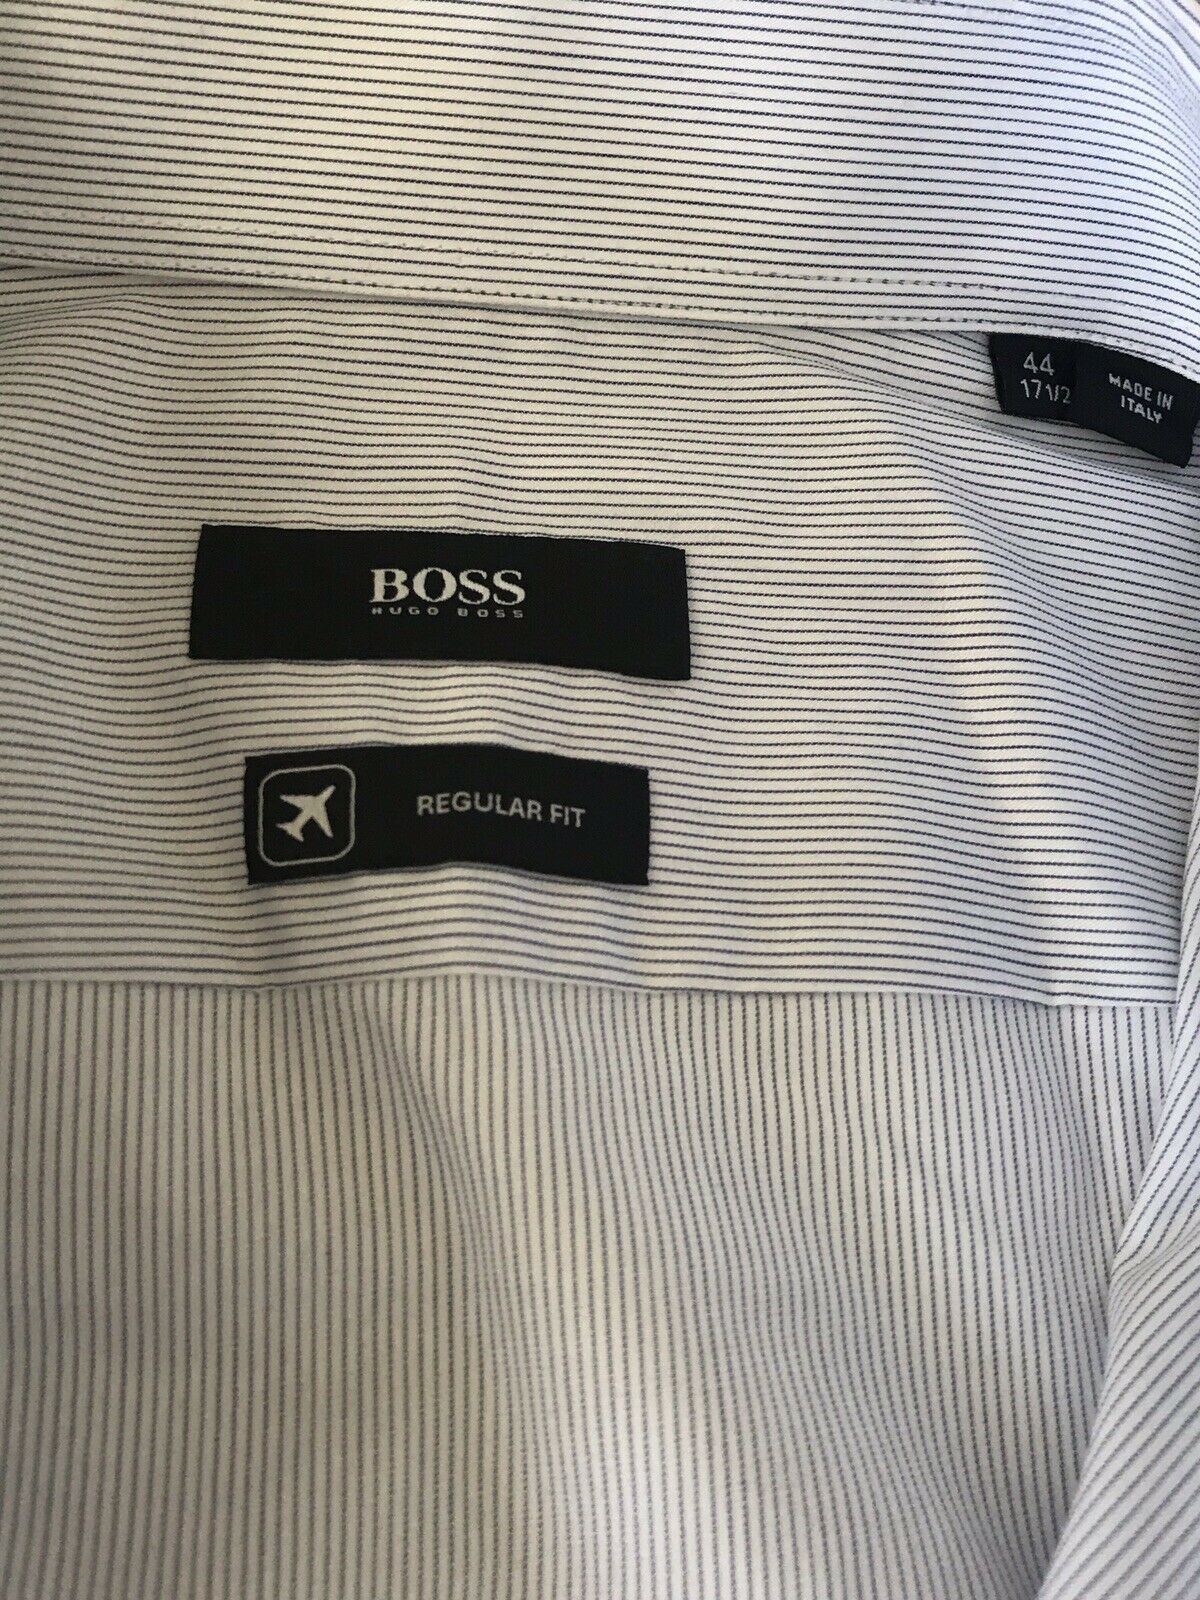 hugo boss travel shirt